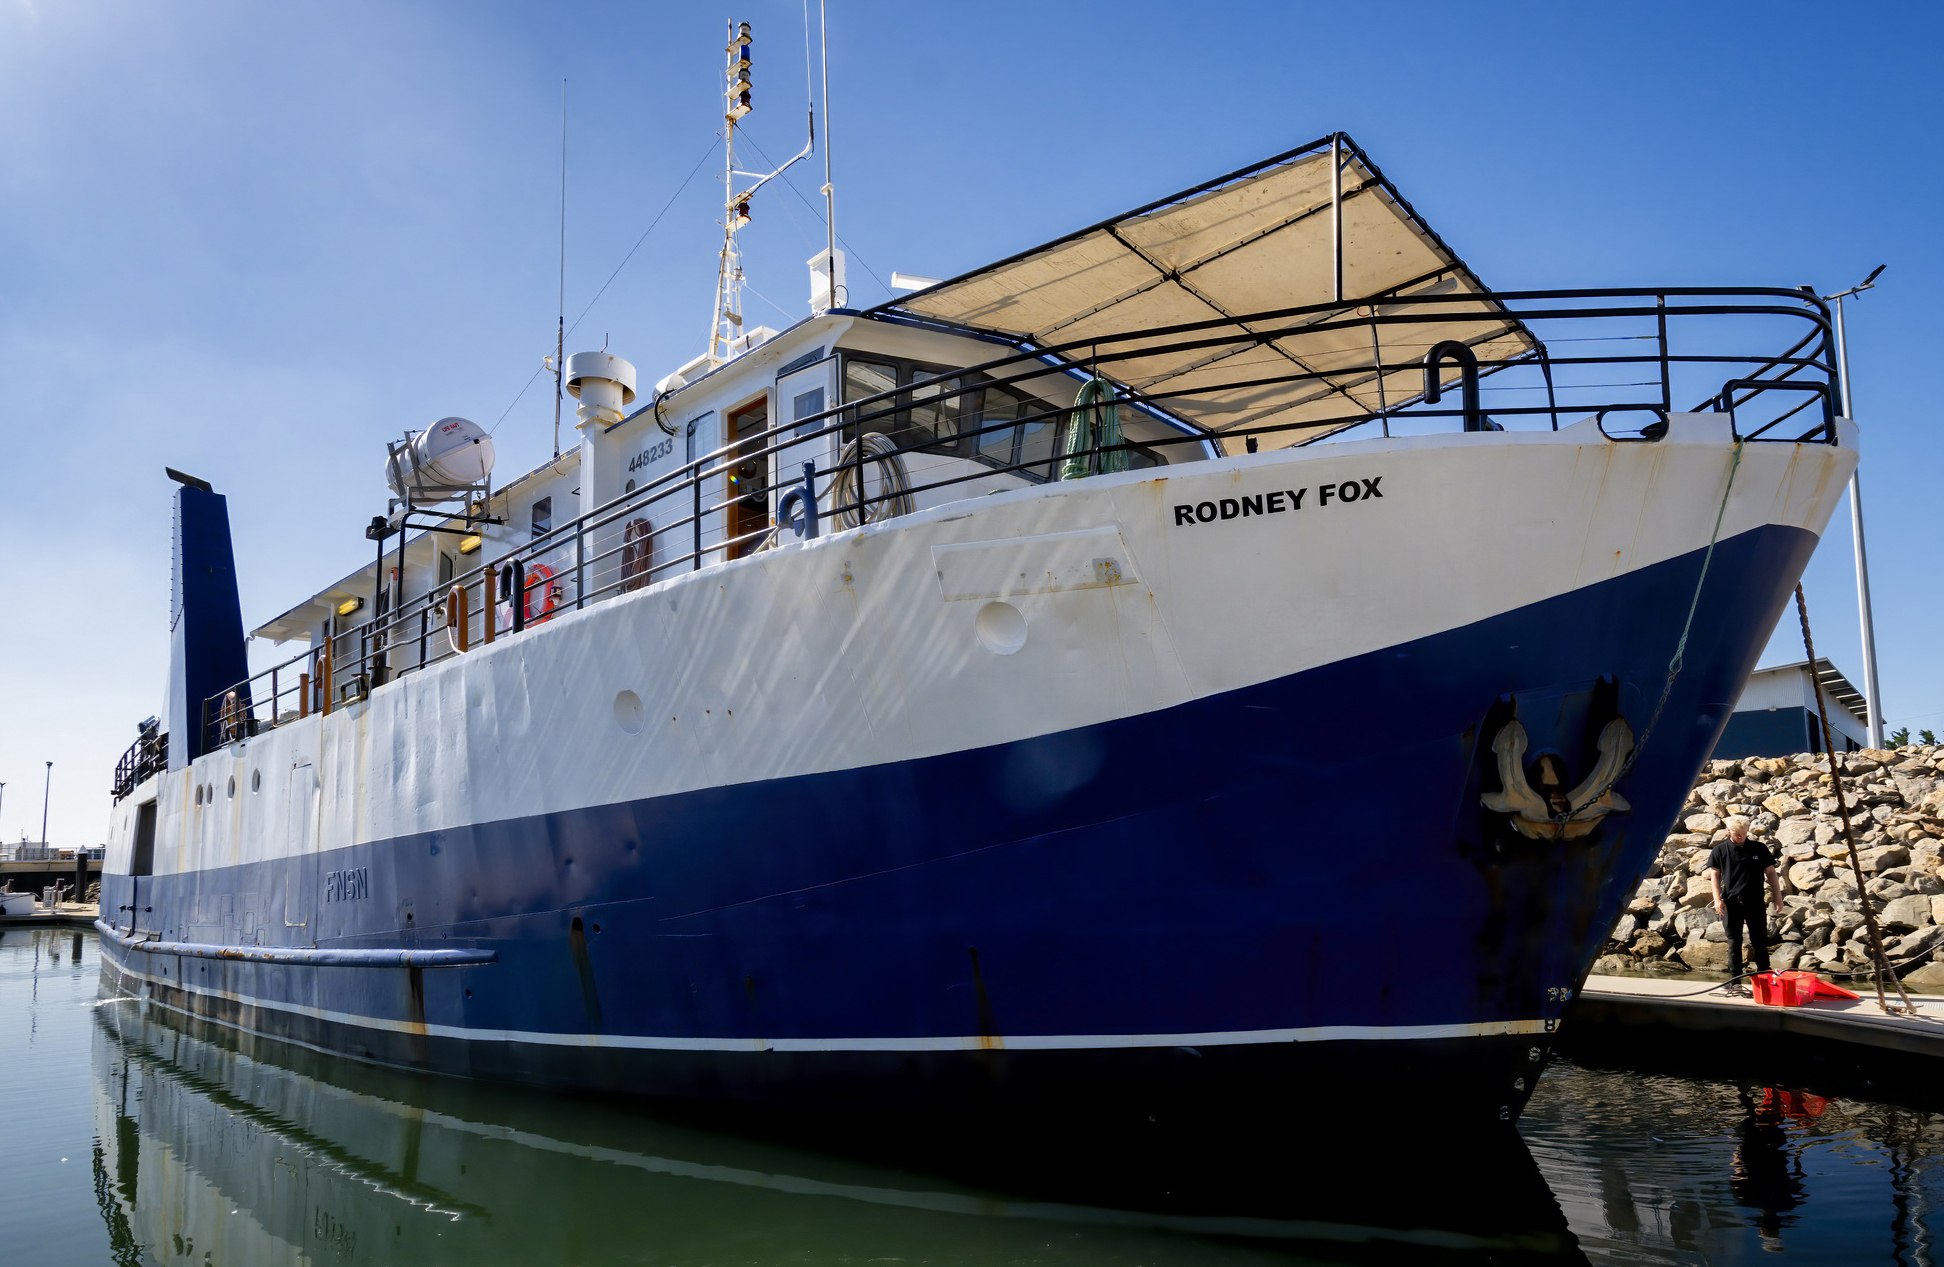 The Rodney Fox vessel. Photo by Don Silcock